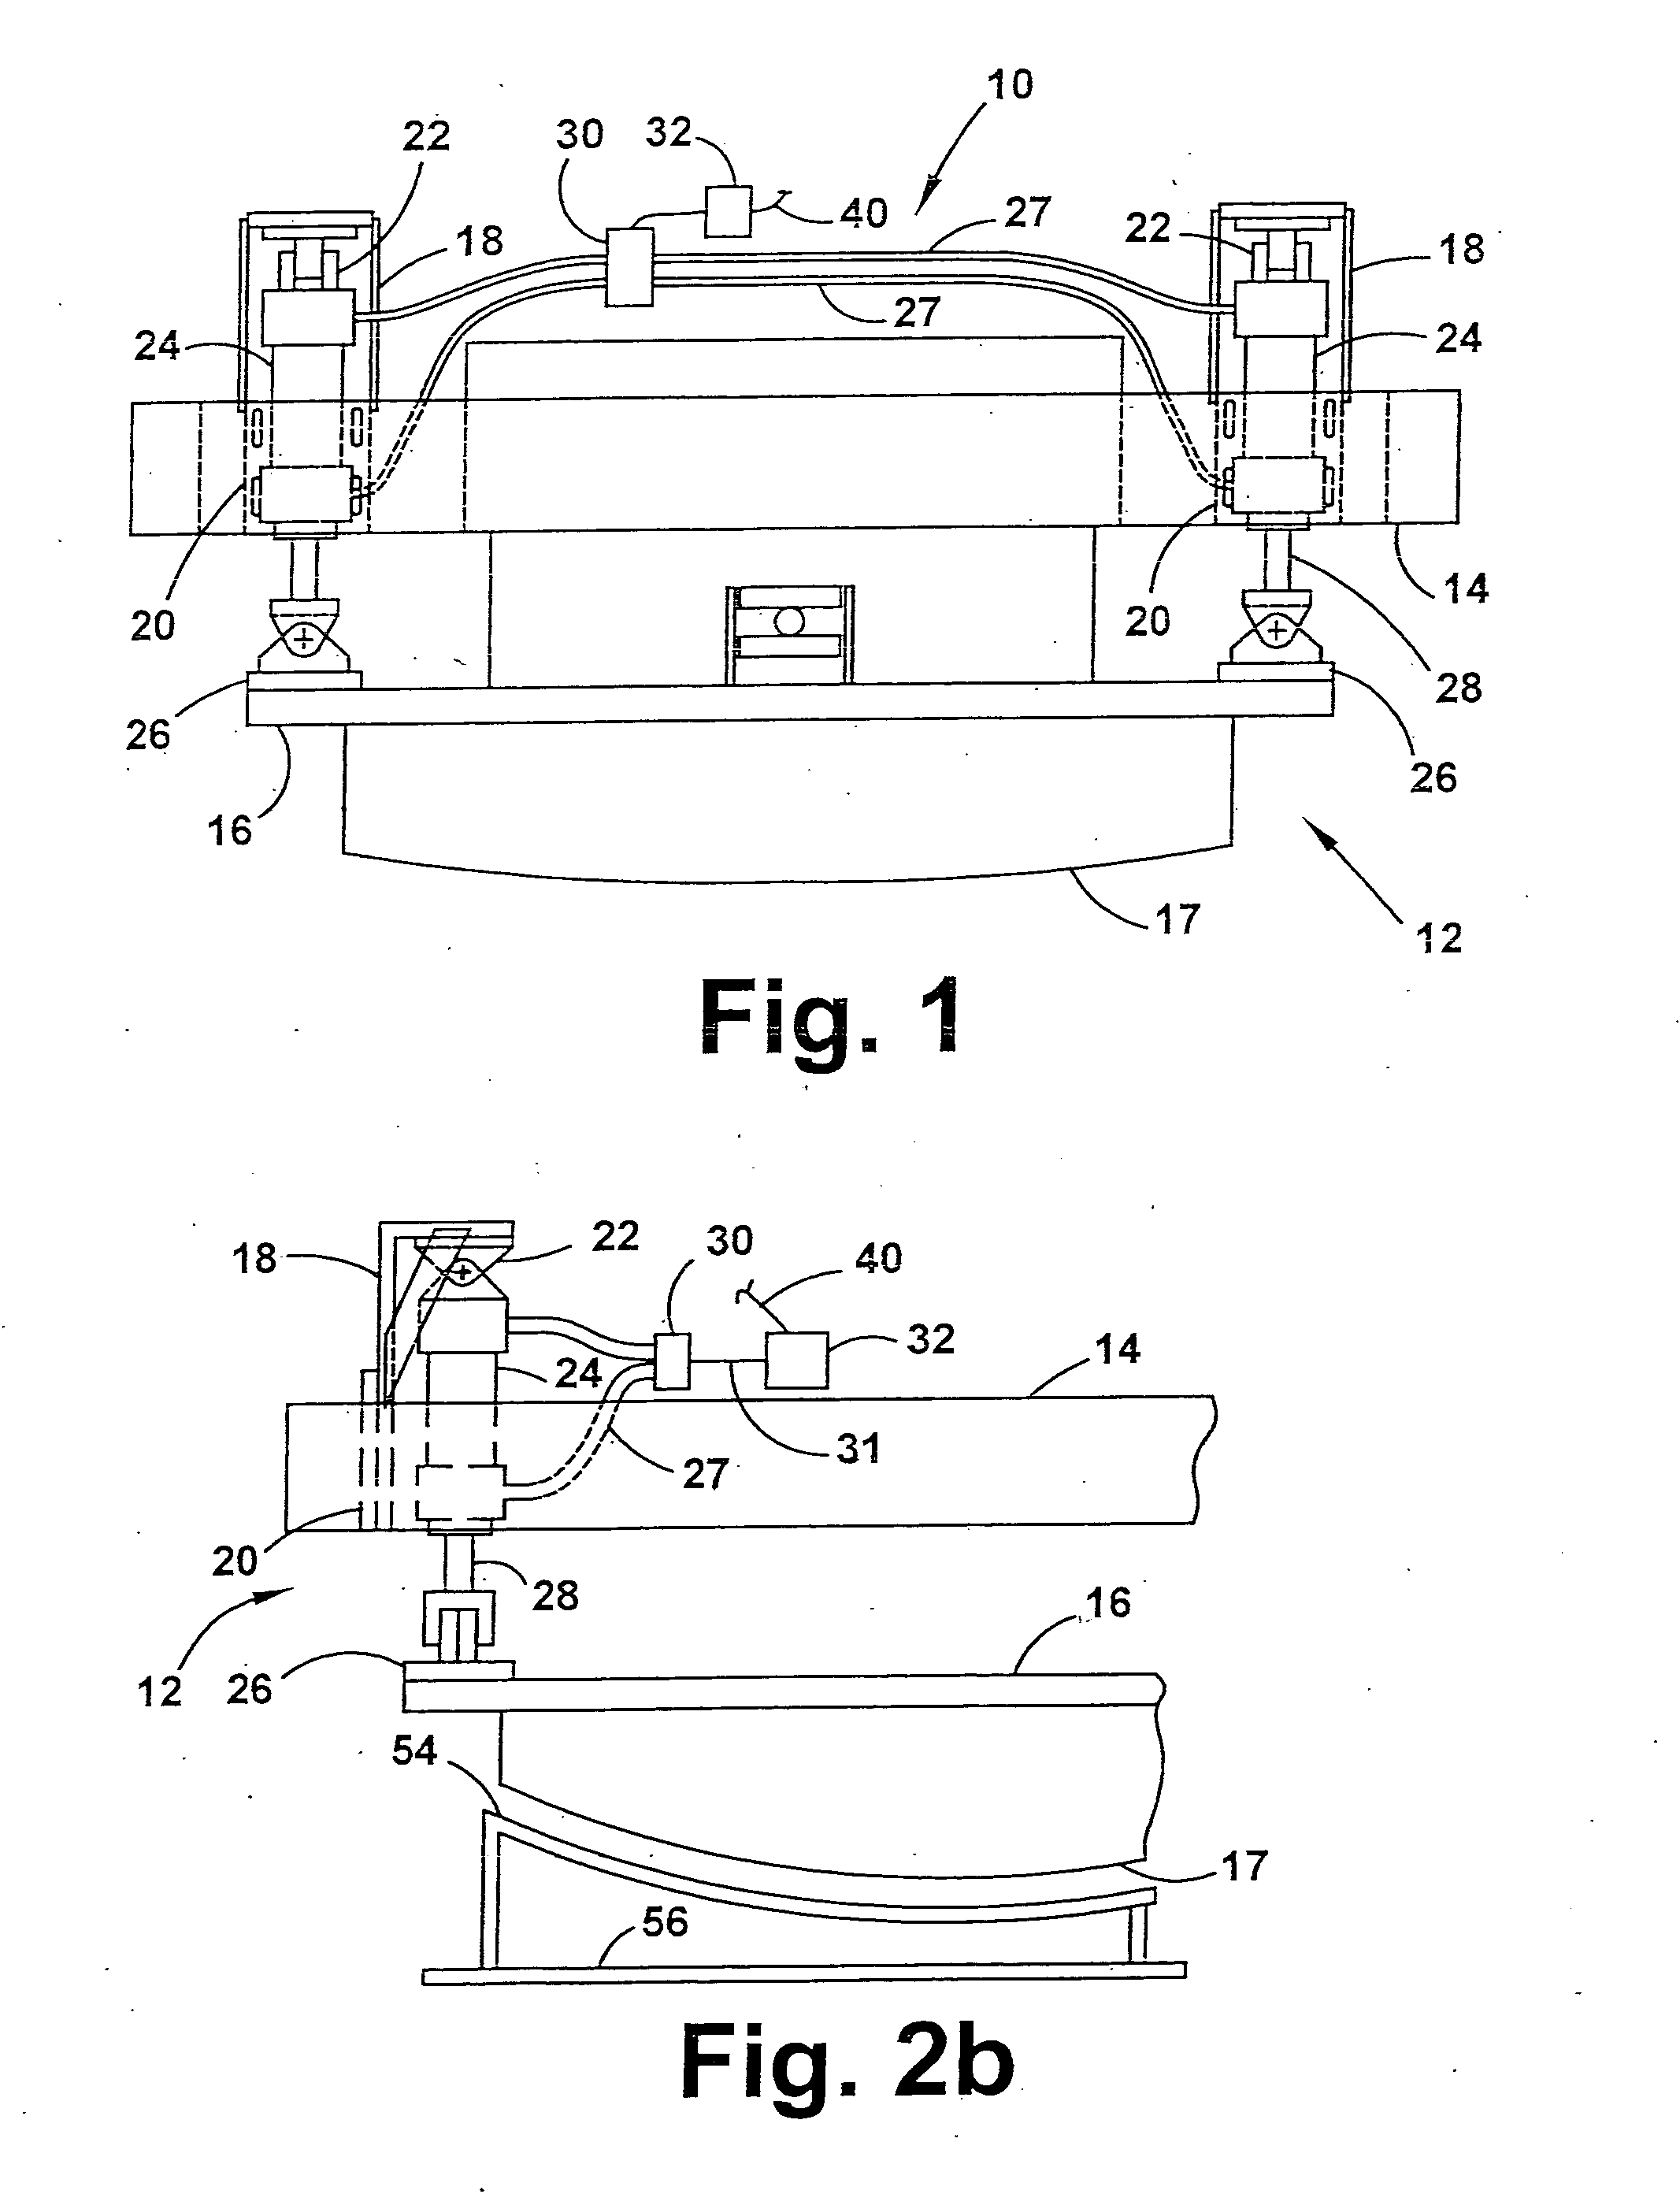 Hood tilt mechanism for curved glass processing